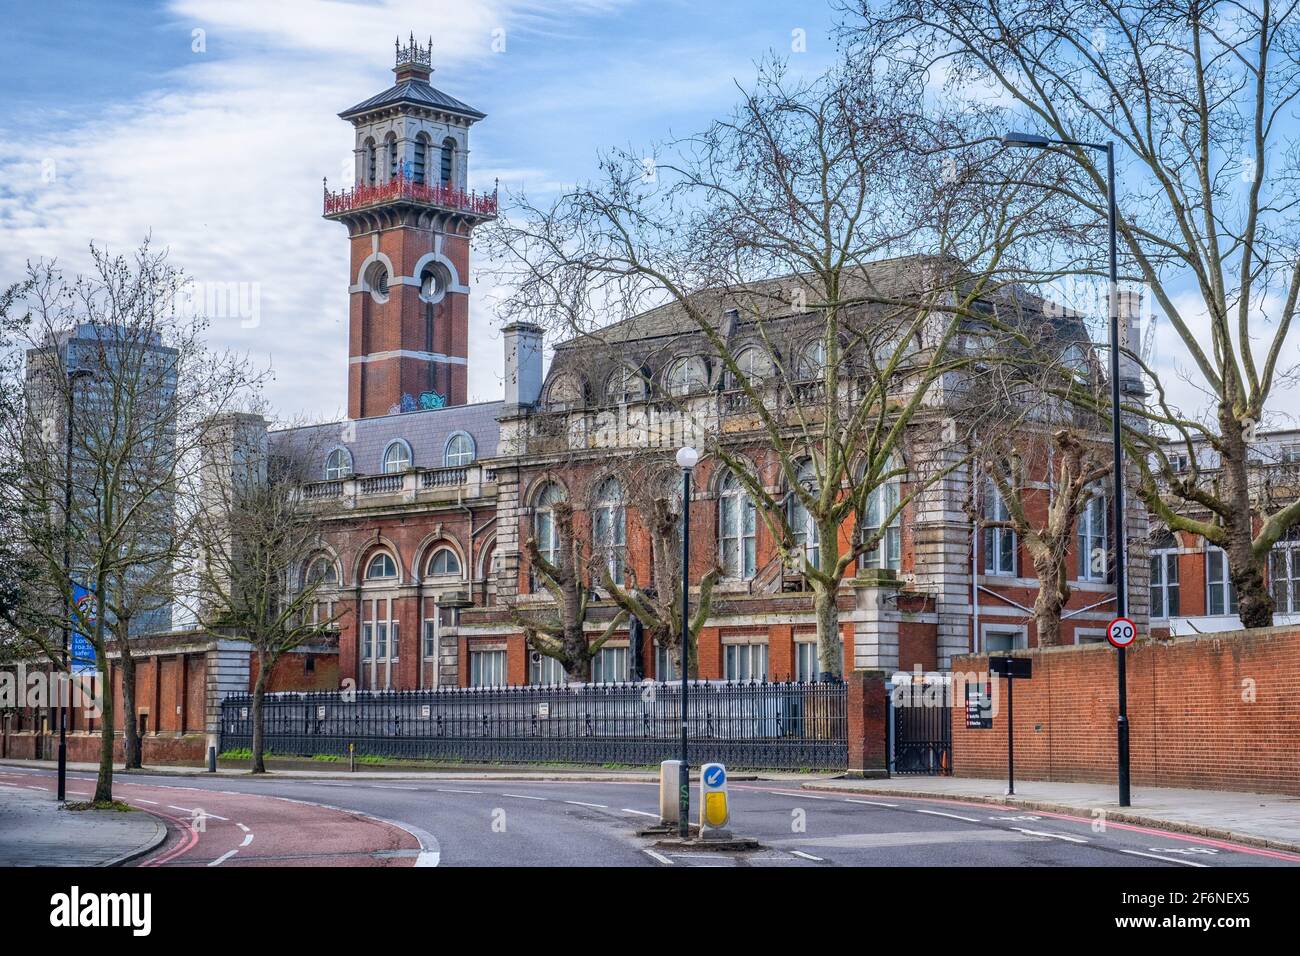 The original Victorian St Thomas' Hospital building located near Waterloo on Albert Embankment in London, England, UK Stock Photo